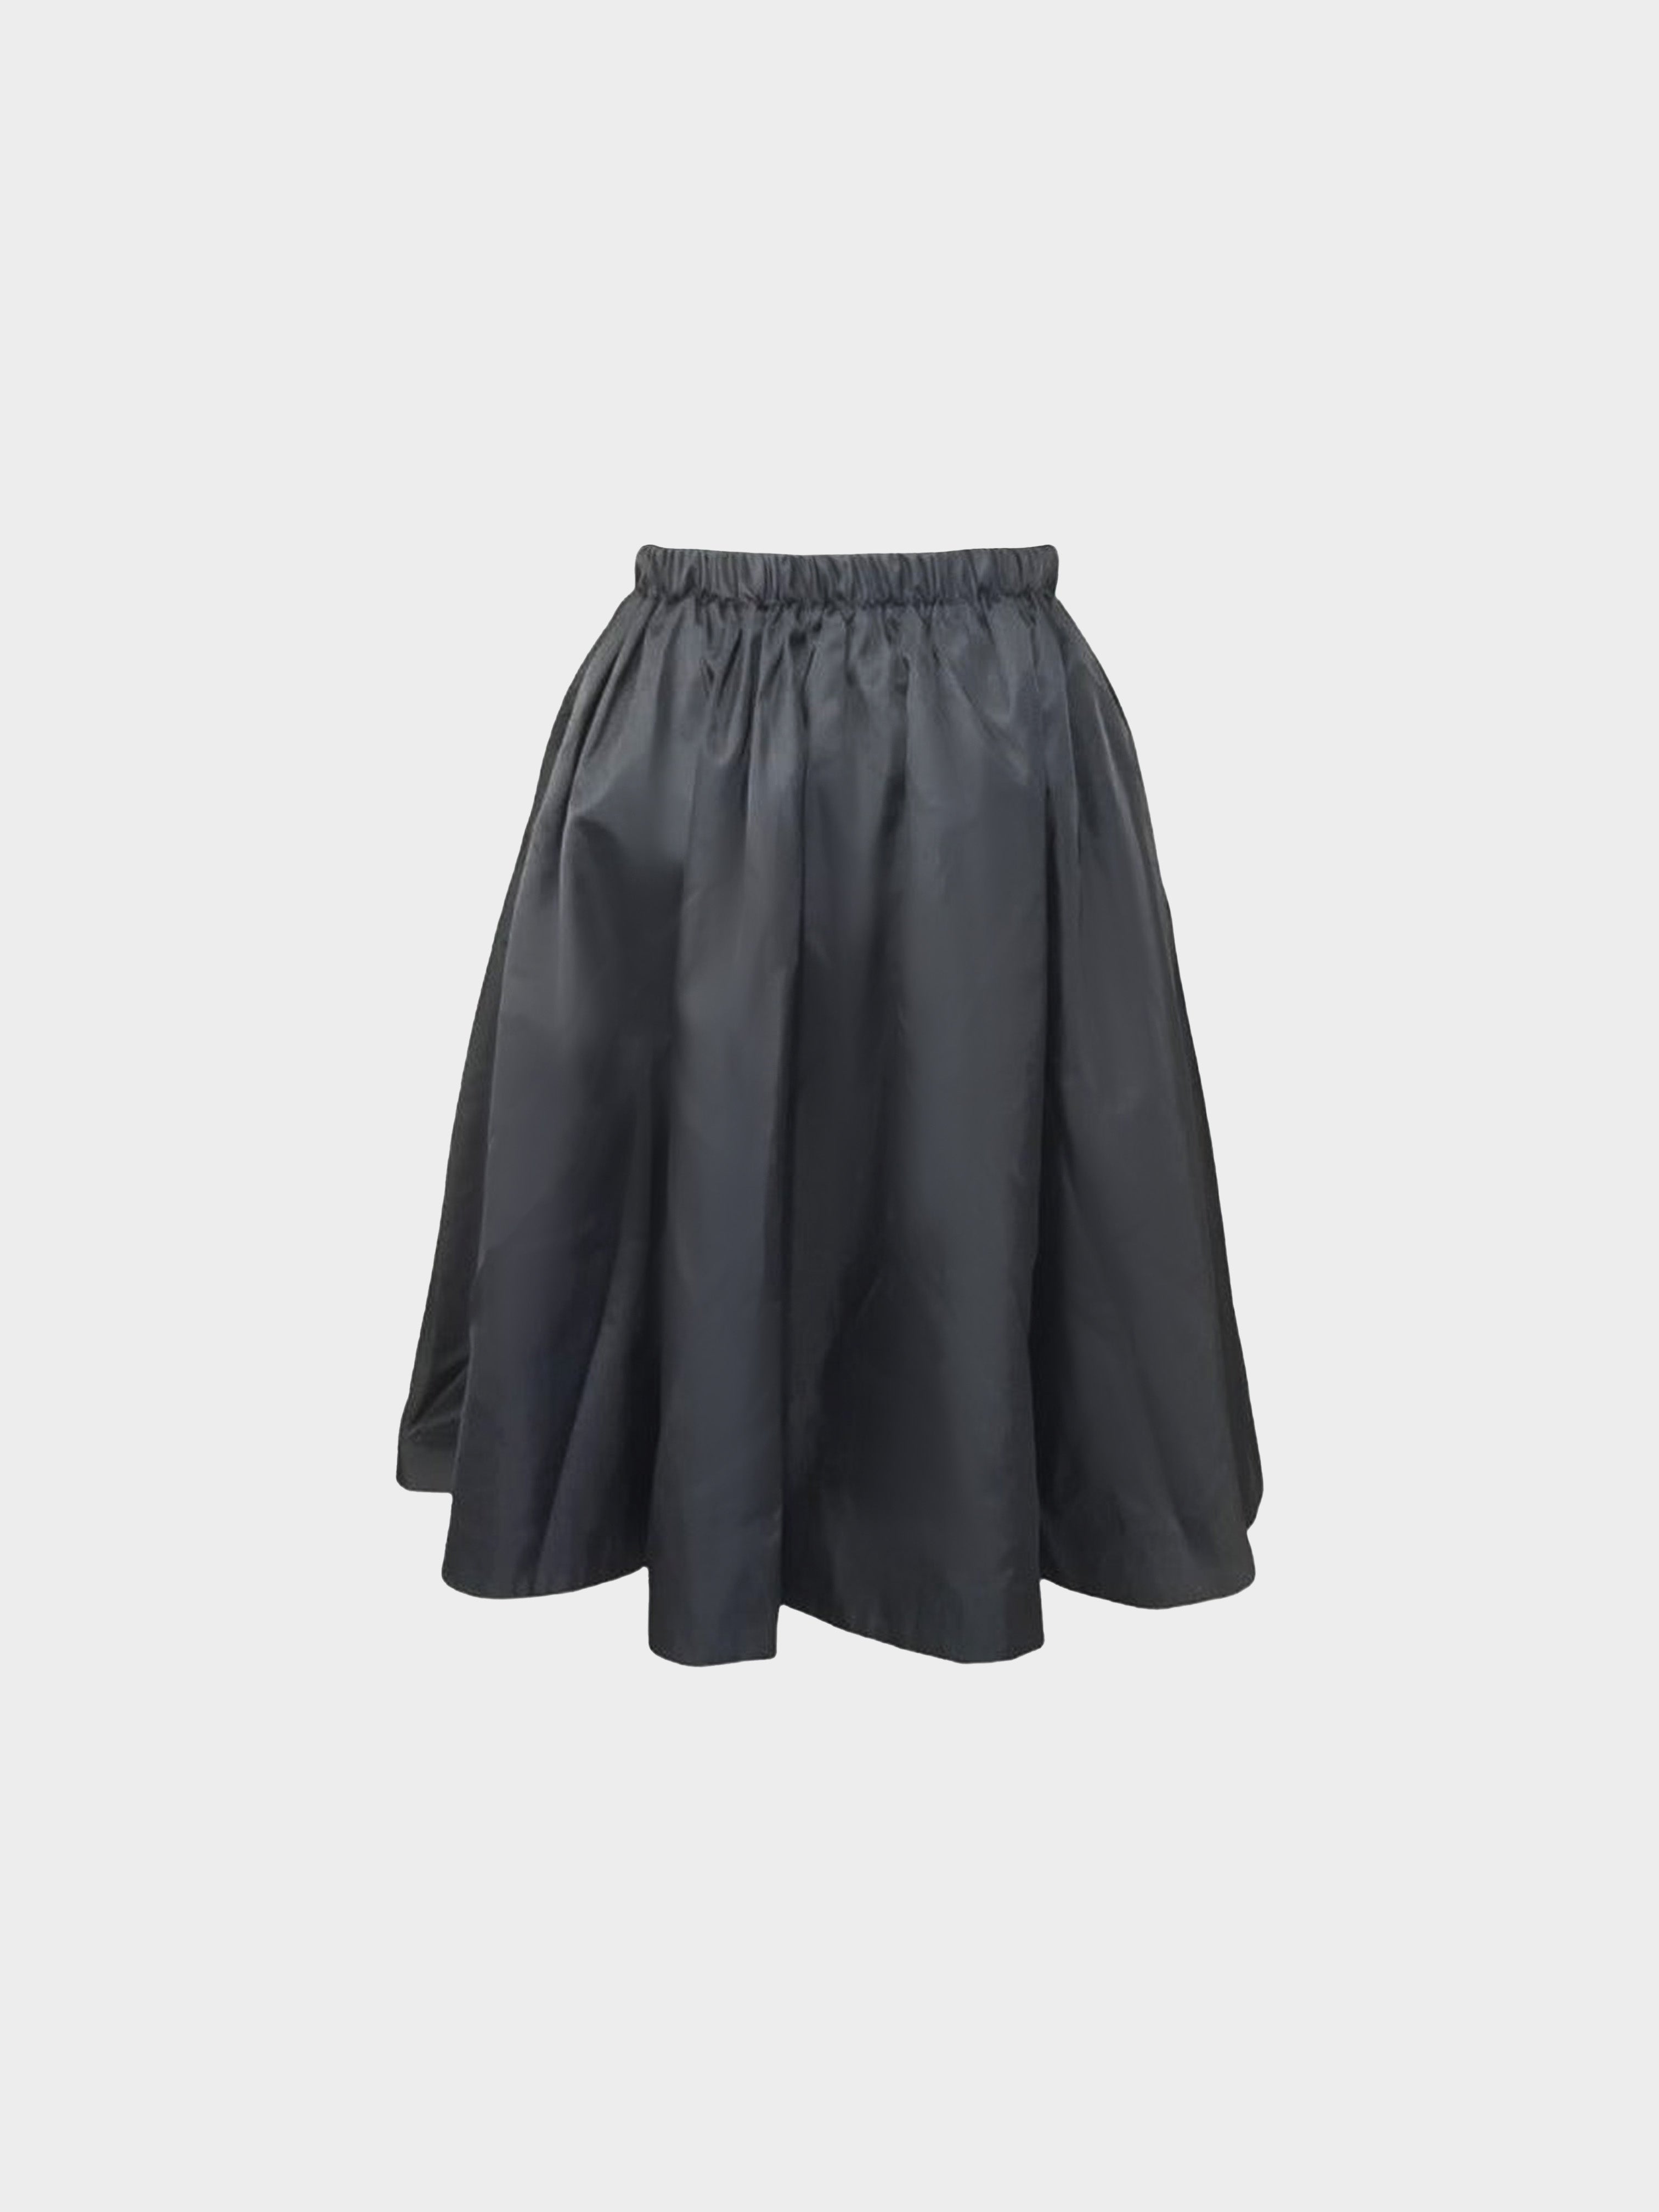 Prada Fall 2016 Black Puffy Gabardine Skirt